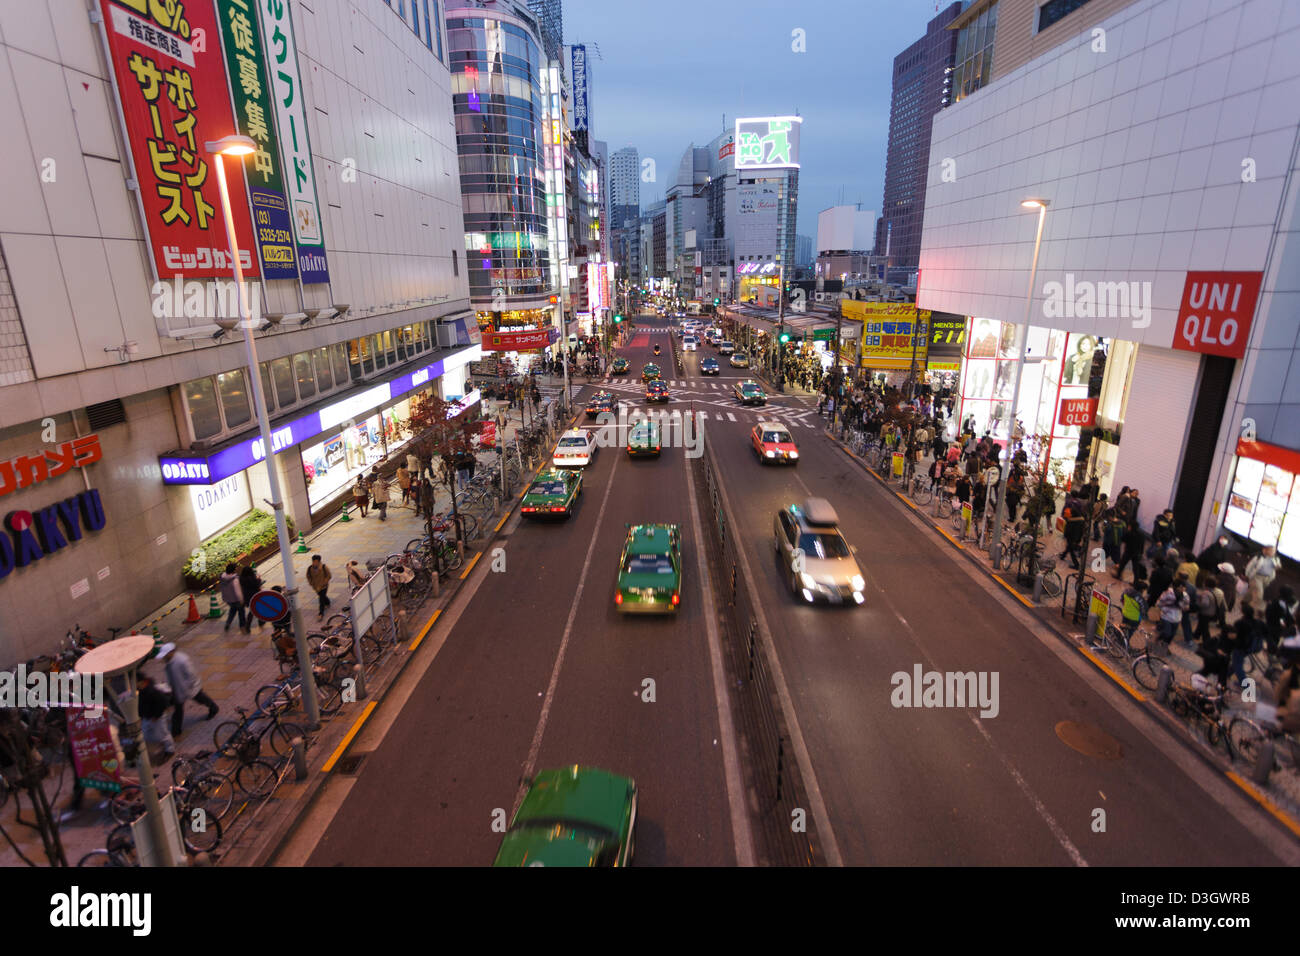 Tokyo, Japan: evening scene in a Shinjuku district street Stock Photo